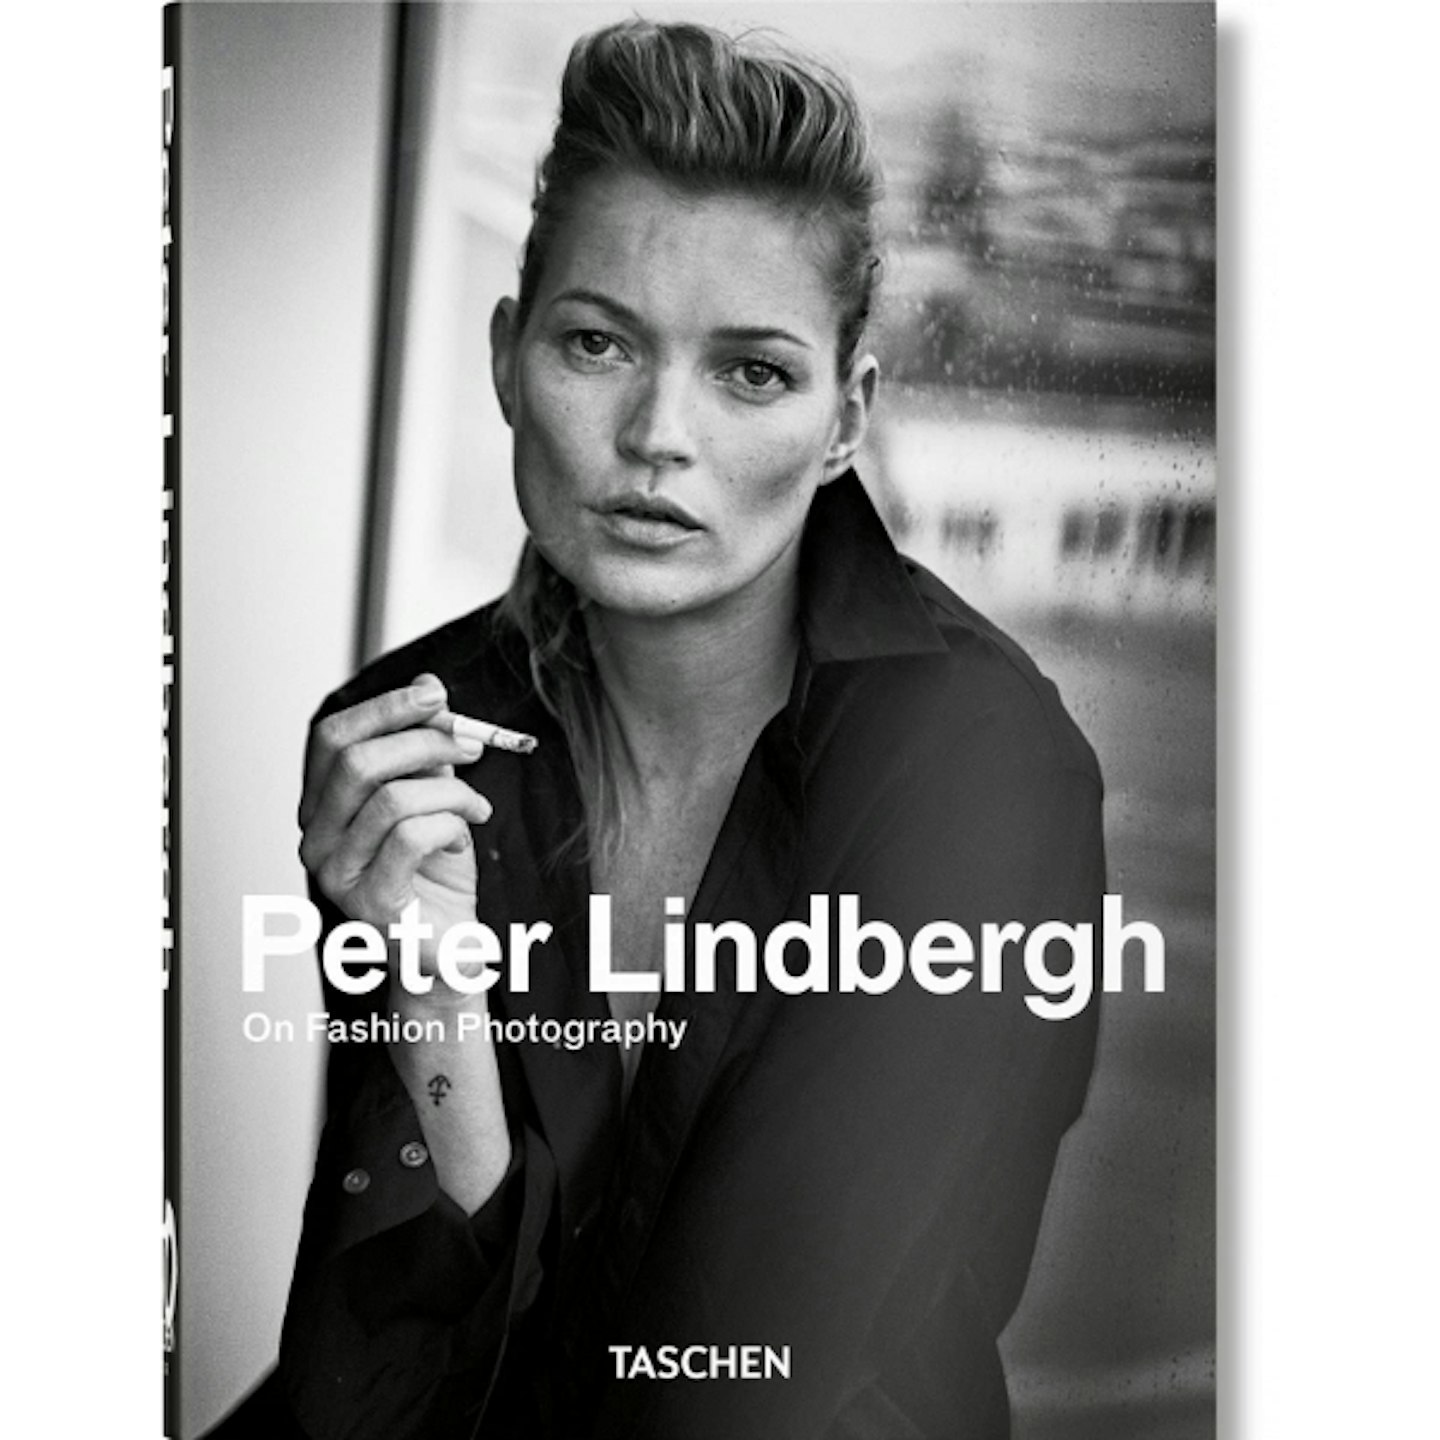 Peter Lindbergh On Fashion Photography